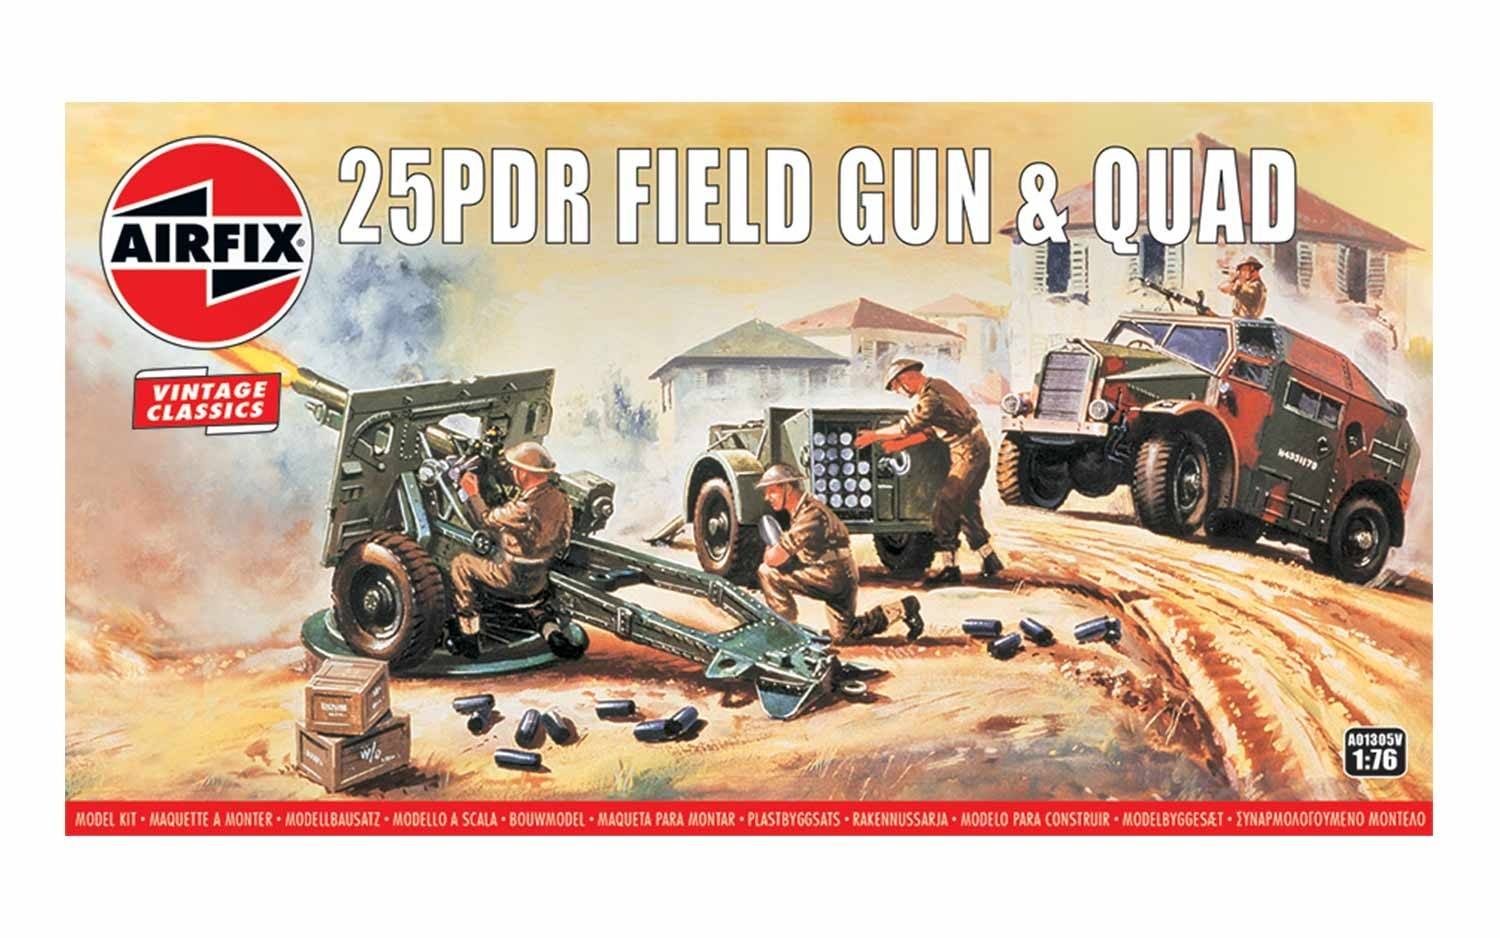 Vintage Classics - 25pdr Field Gun & Quad 